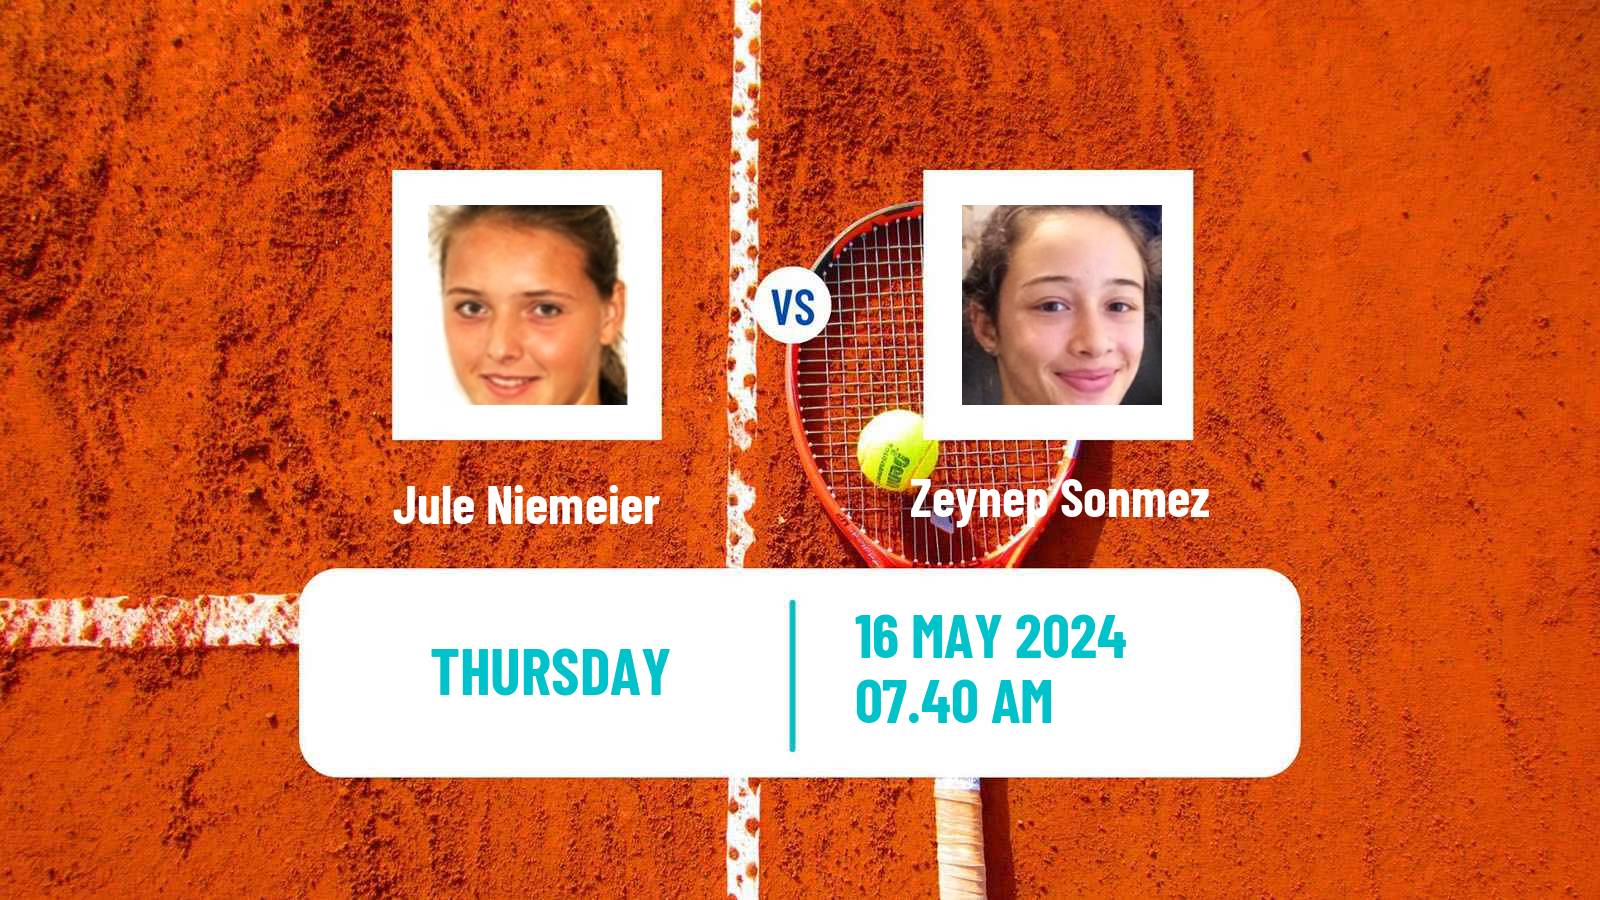 Tennis Parma Challenger Women Jule Niemeier - Zeynep Sonmez